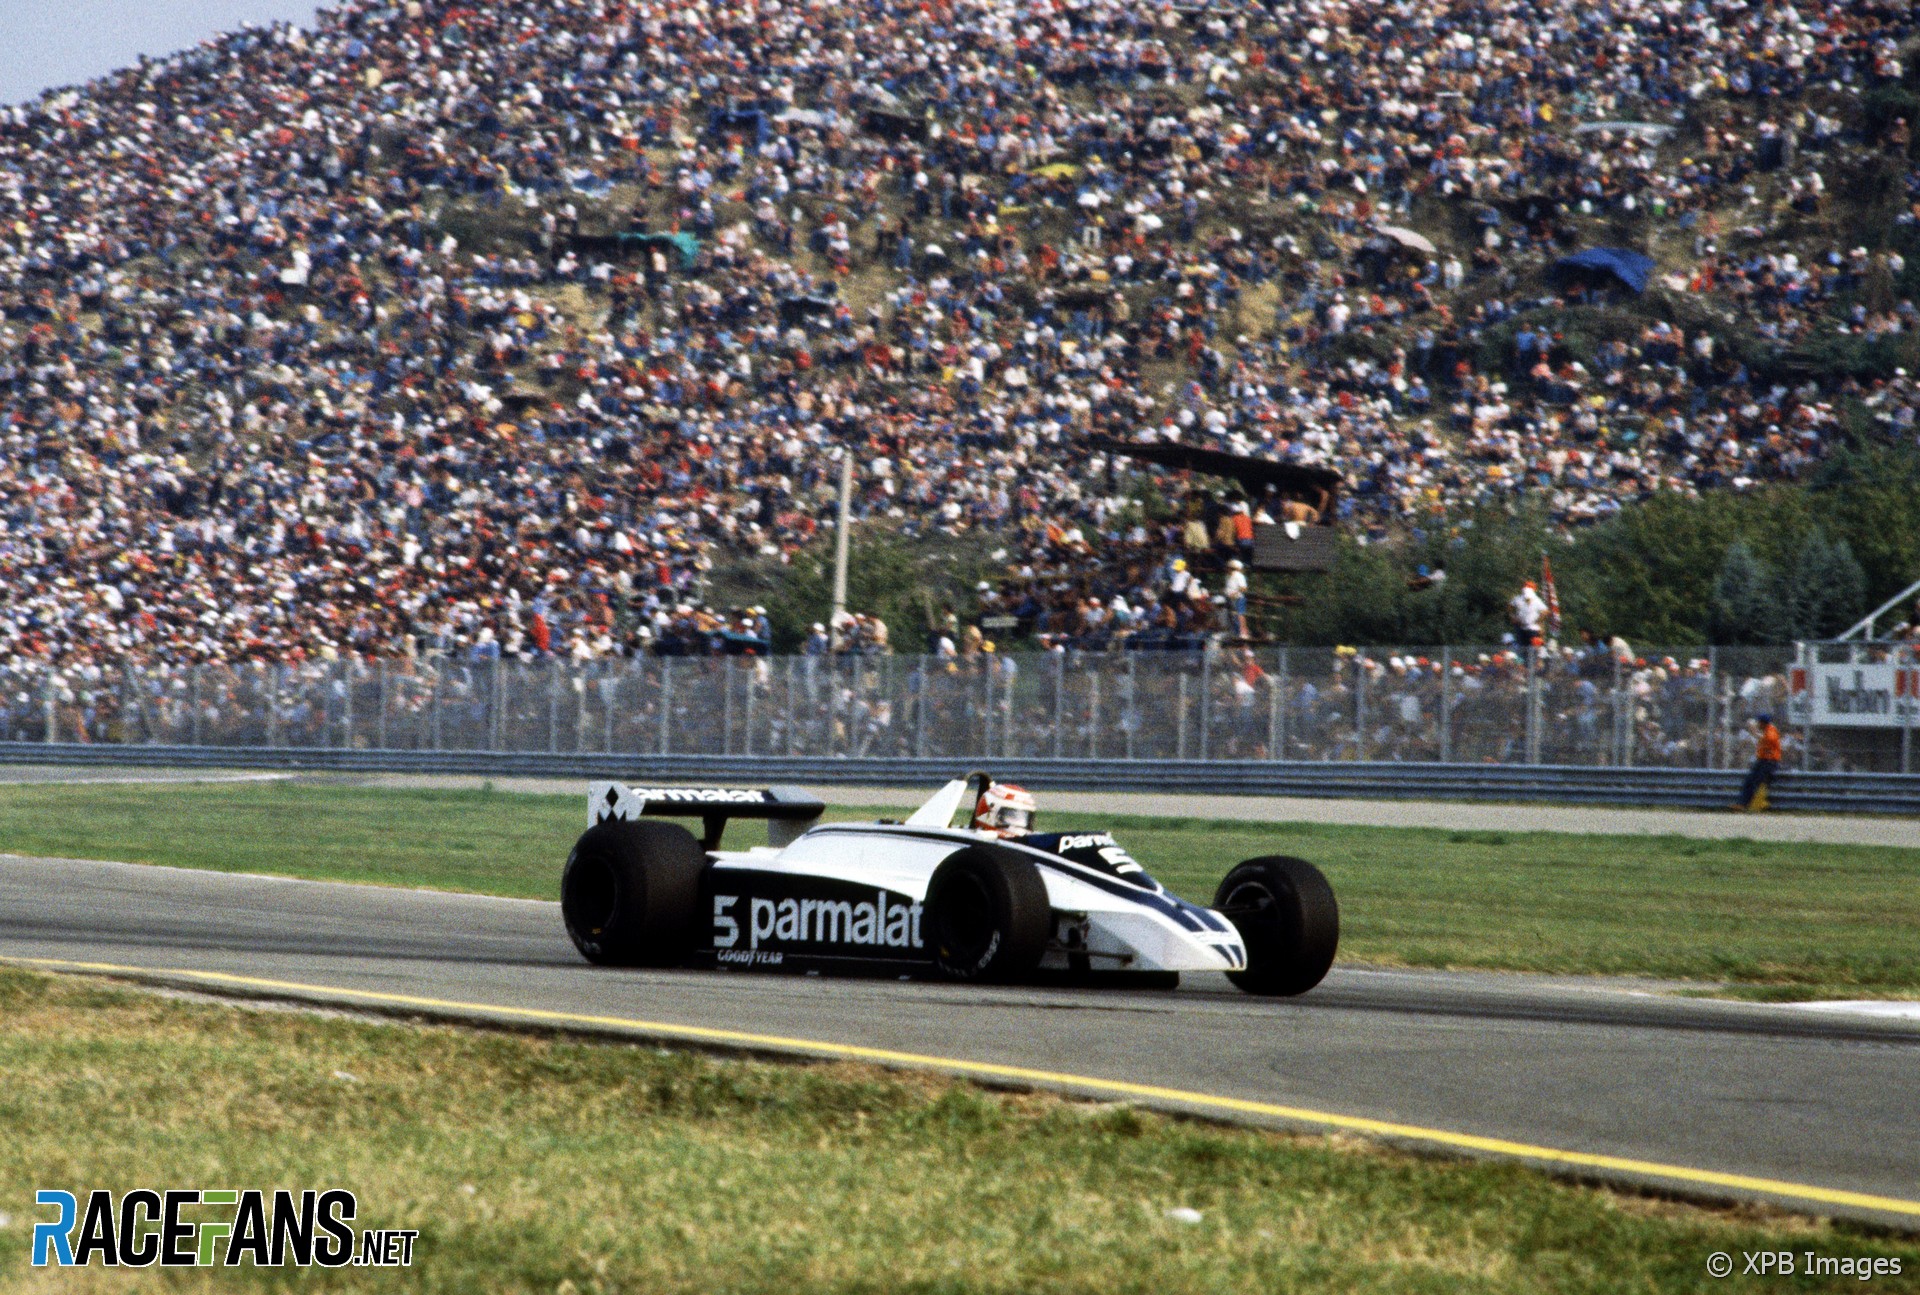 Nelson Piquet, Brabham, Imola, 1980